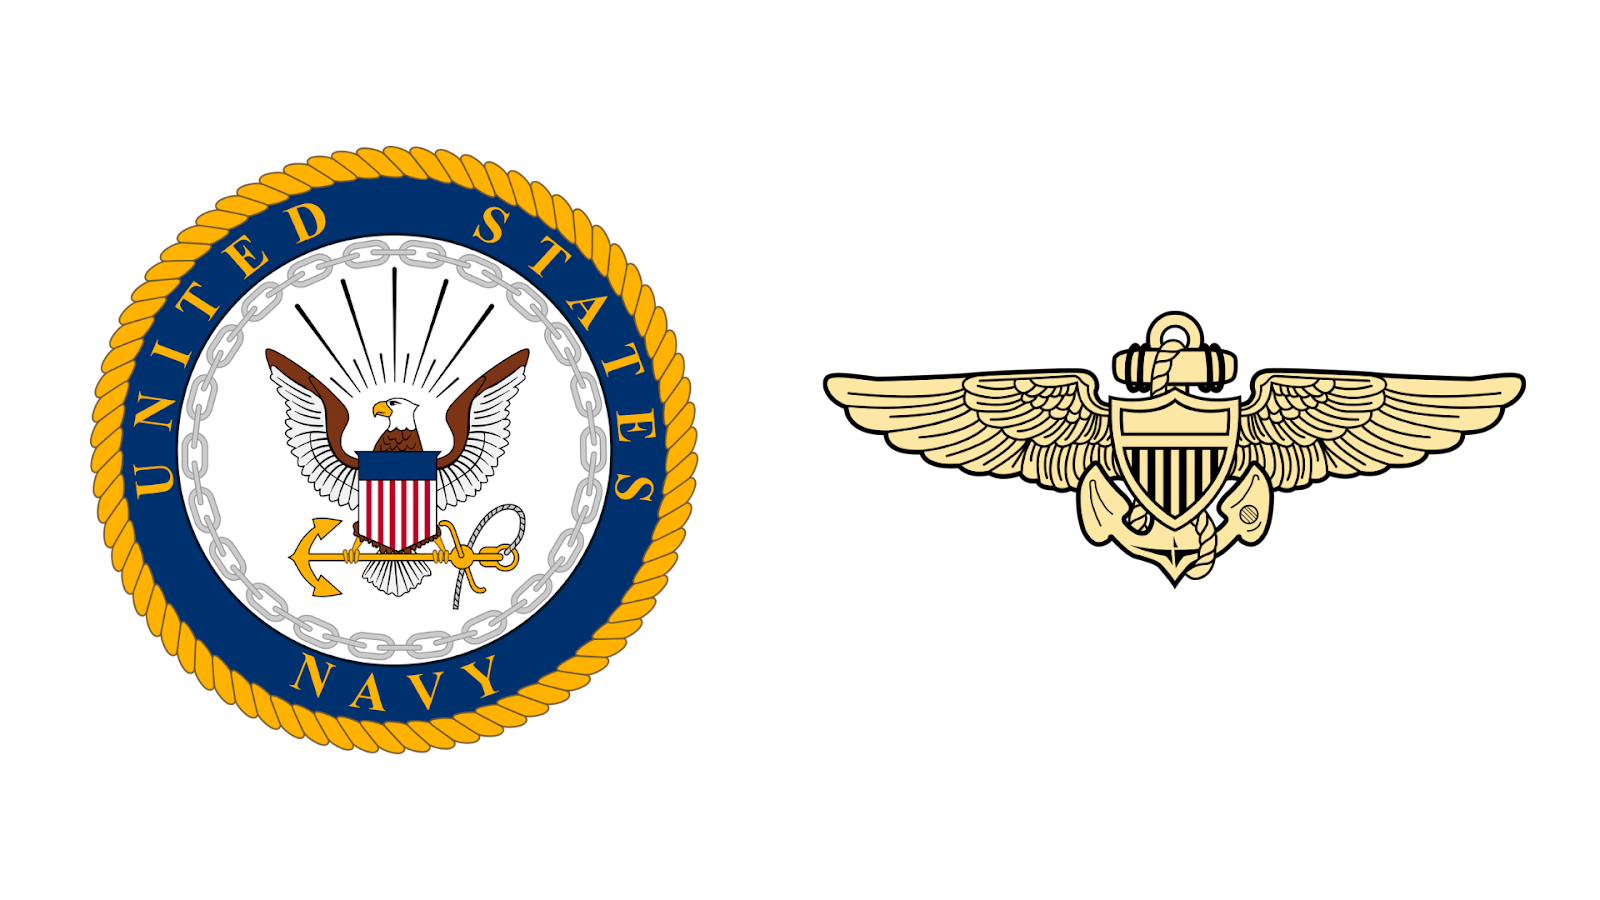 Navy aviation emblem and insignia. 